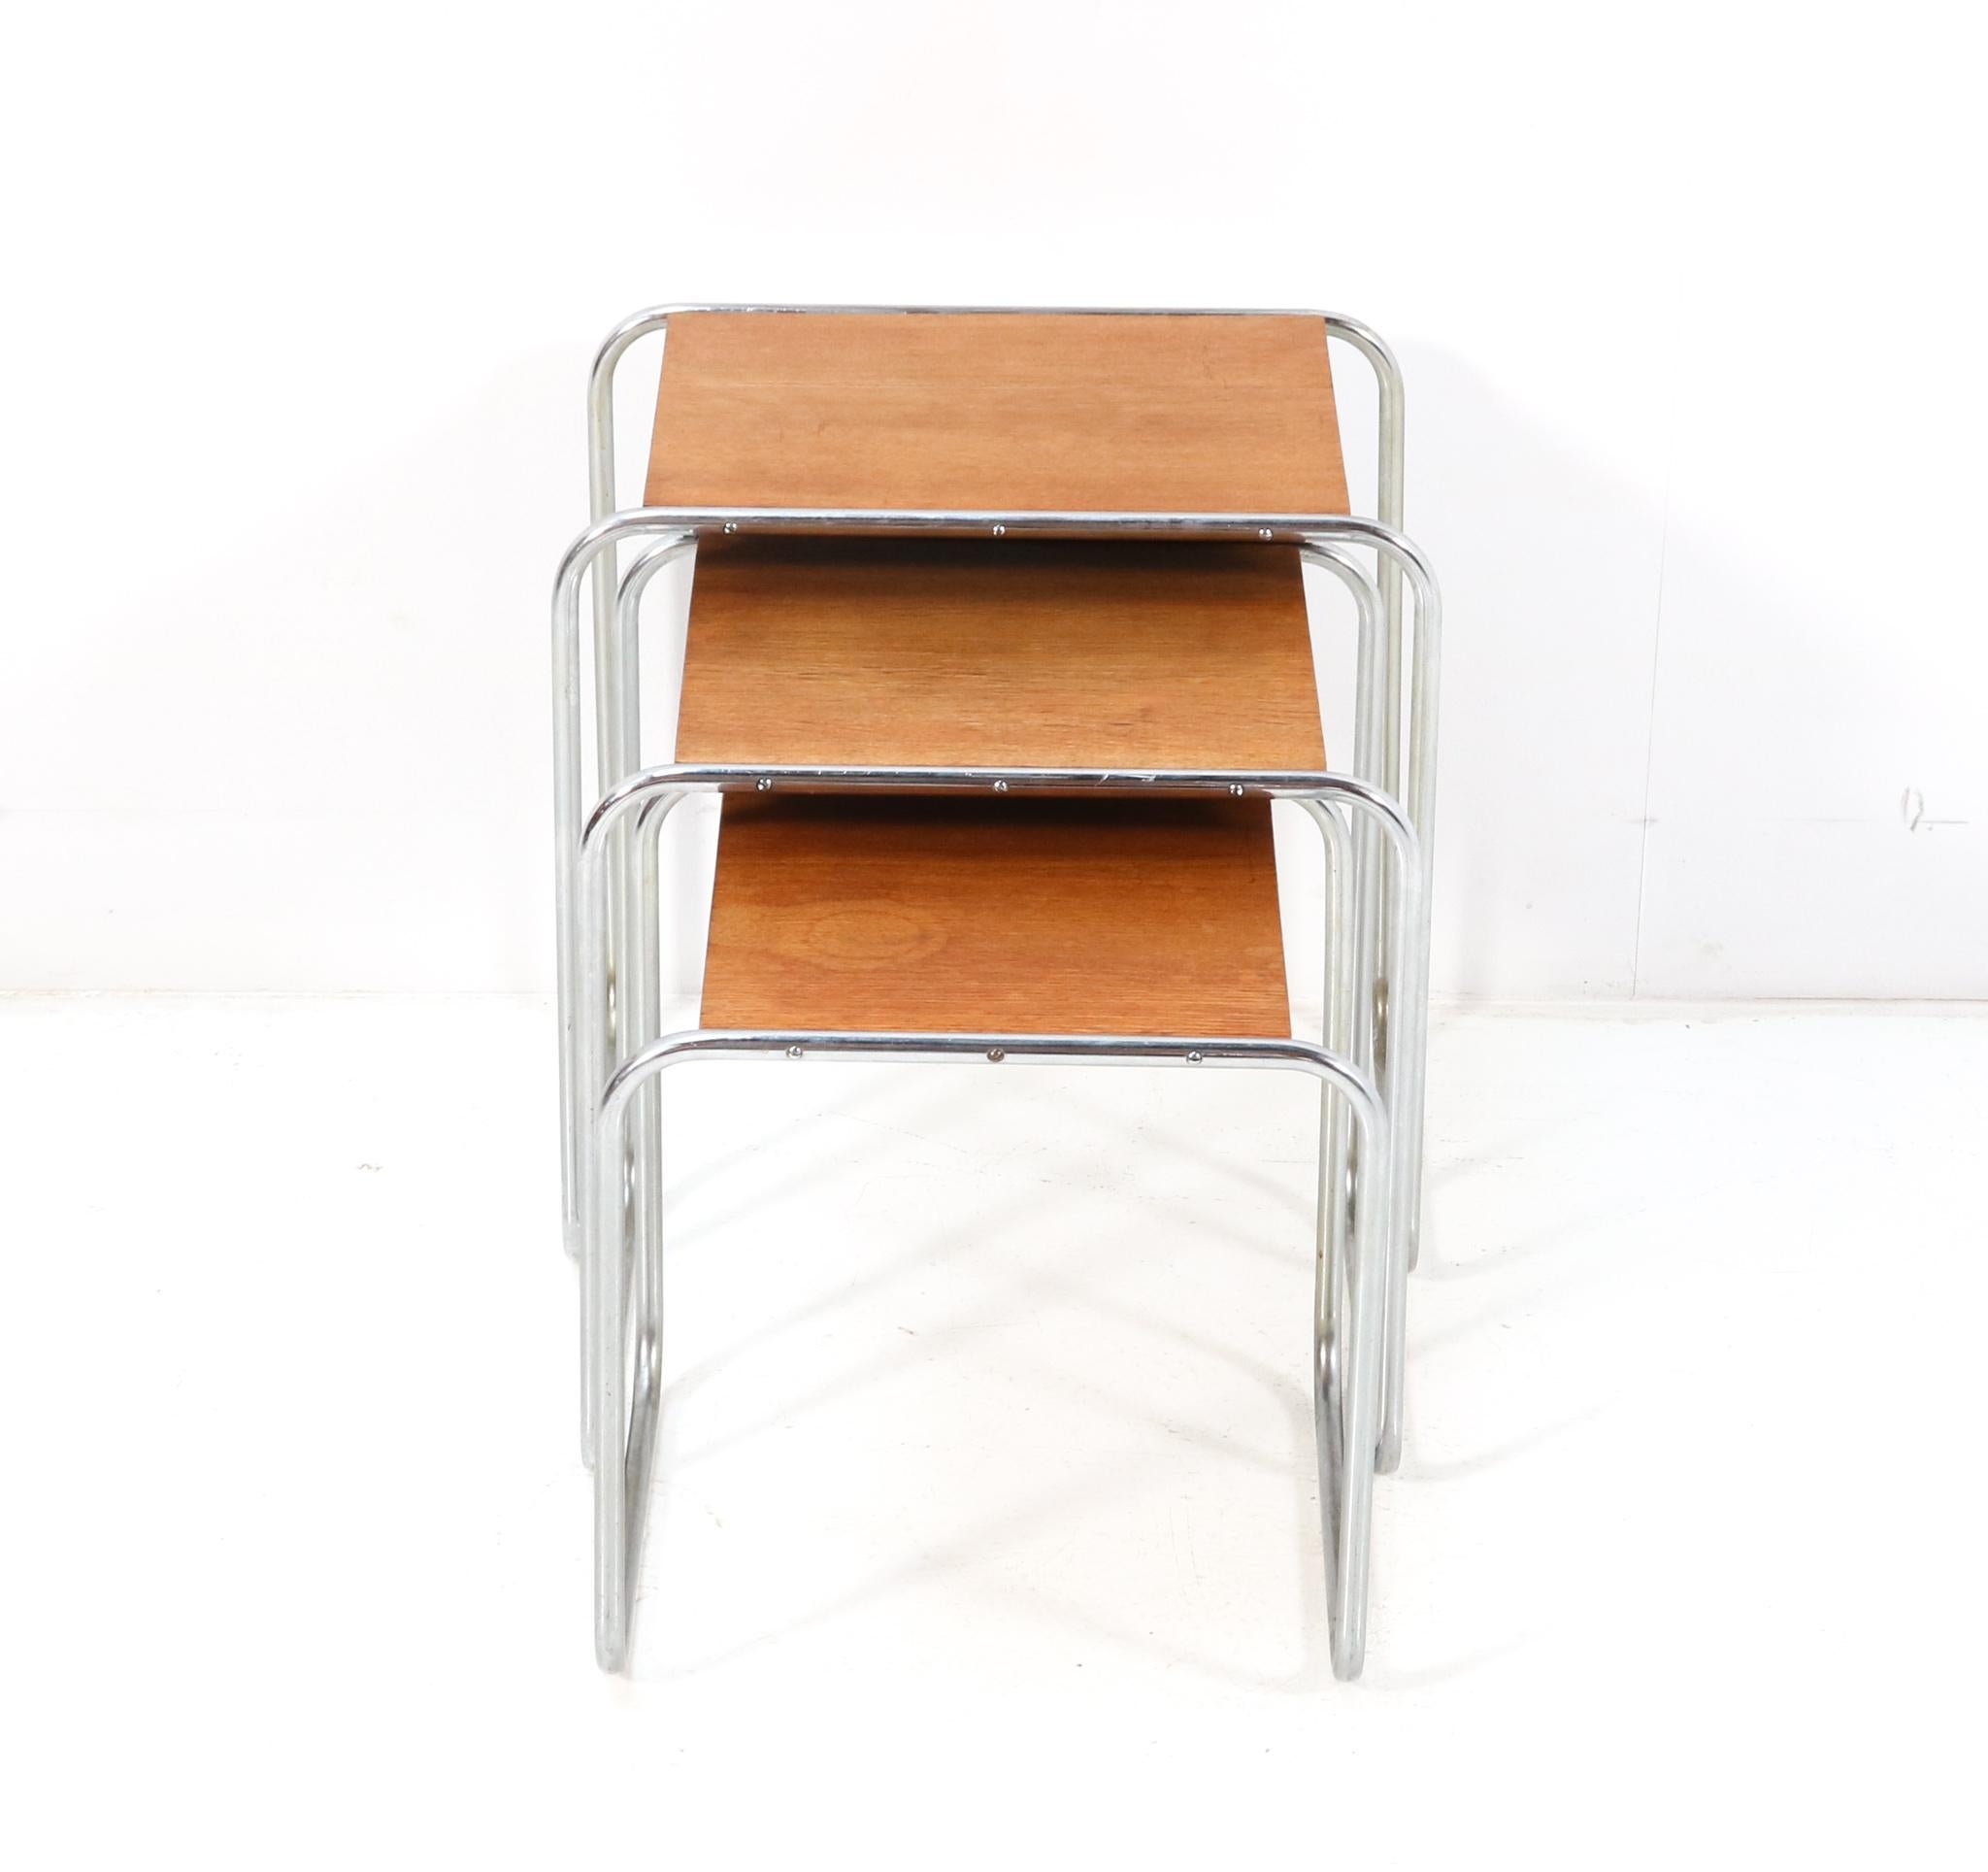 German Art Deco Bauhaus B9 Nesting Tables by Marcel Breuer, 1950s